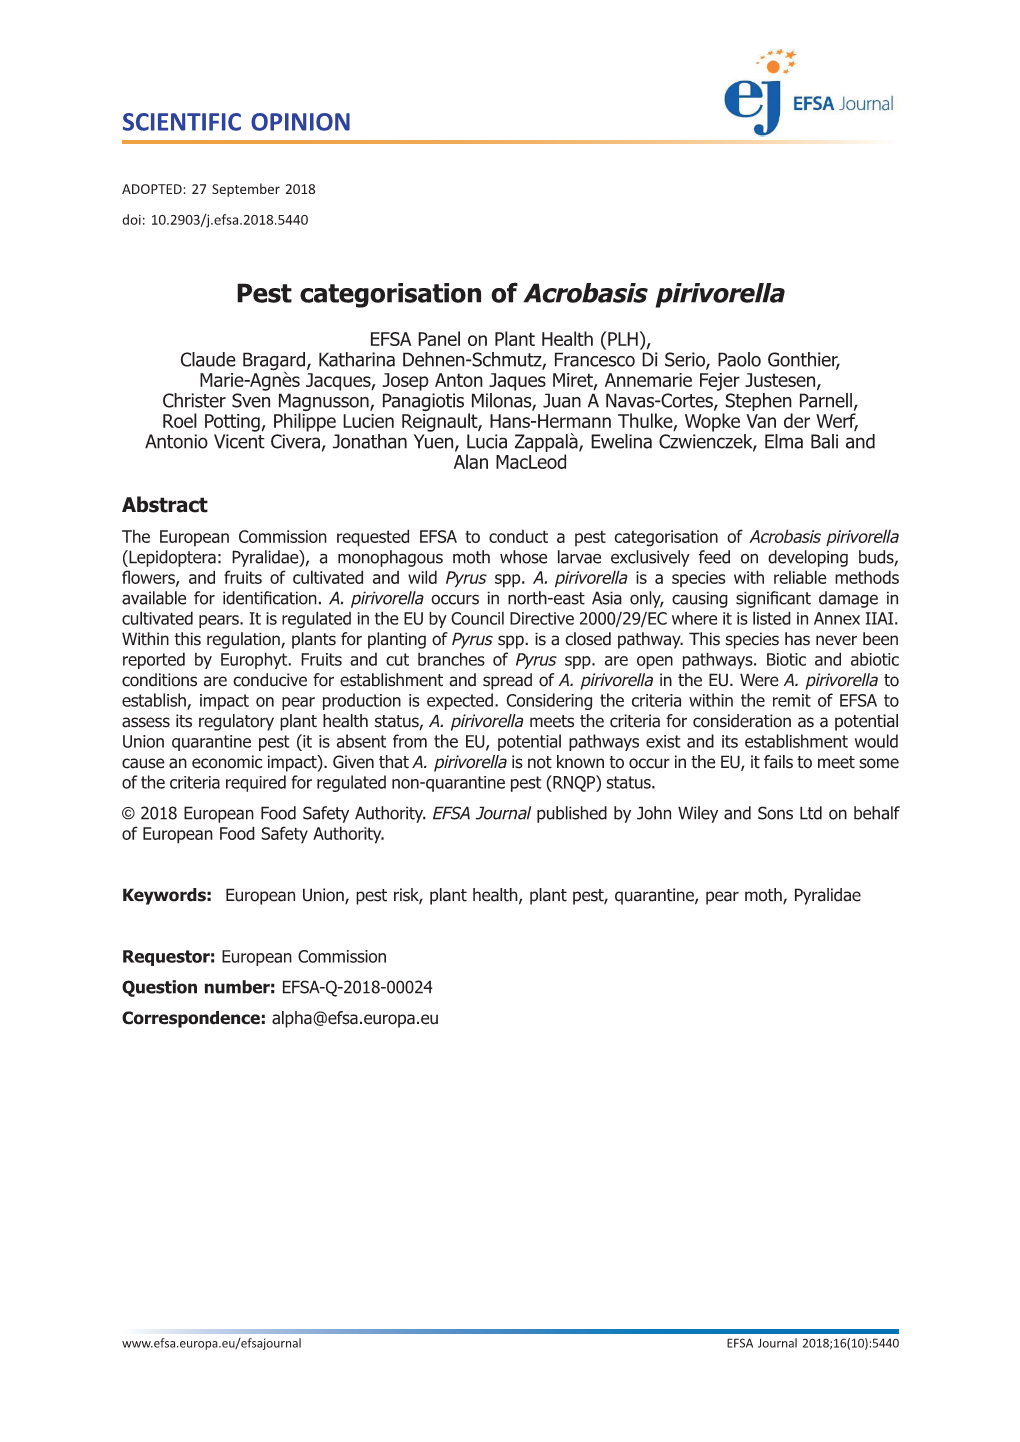 Pest Categorisation of Acrobasis Pirivorella